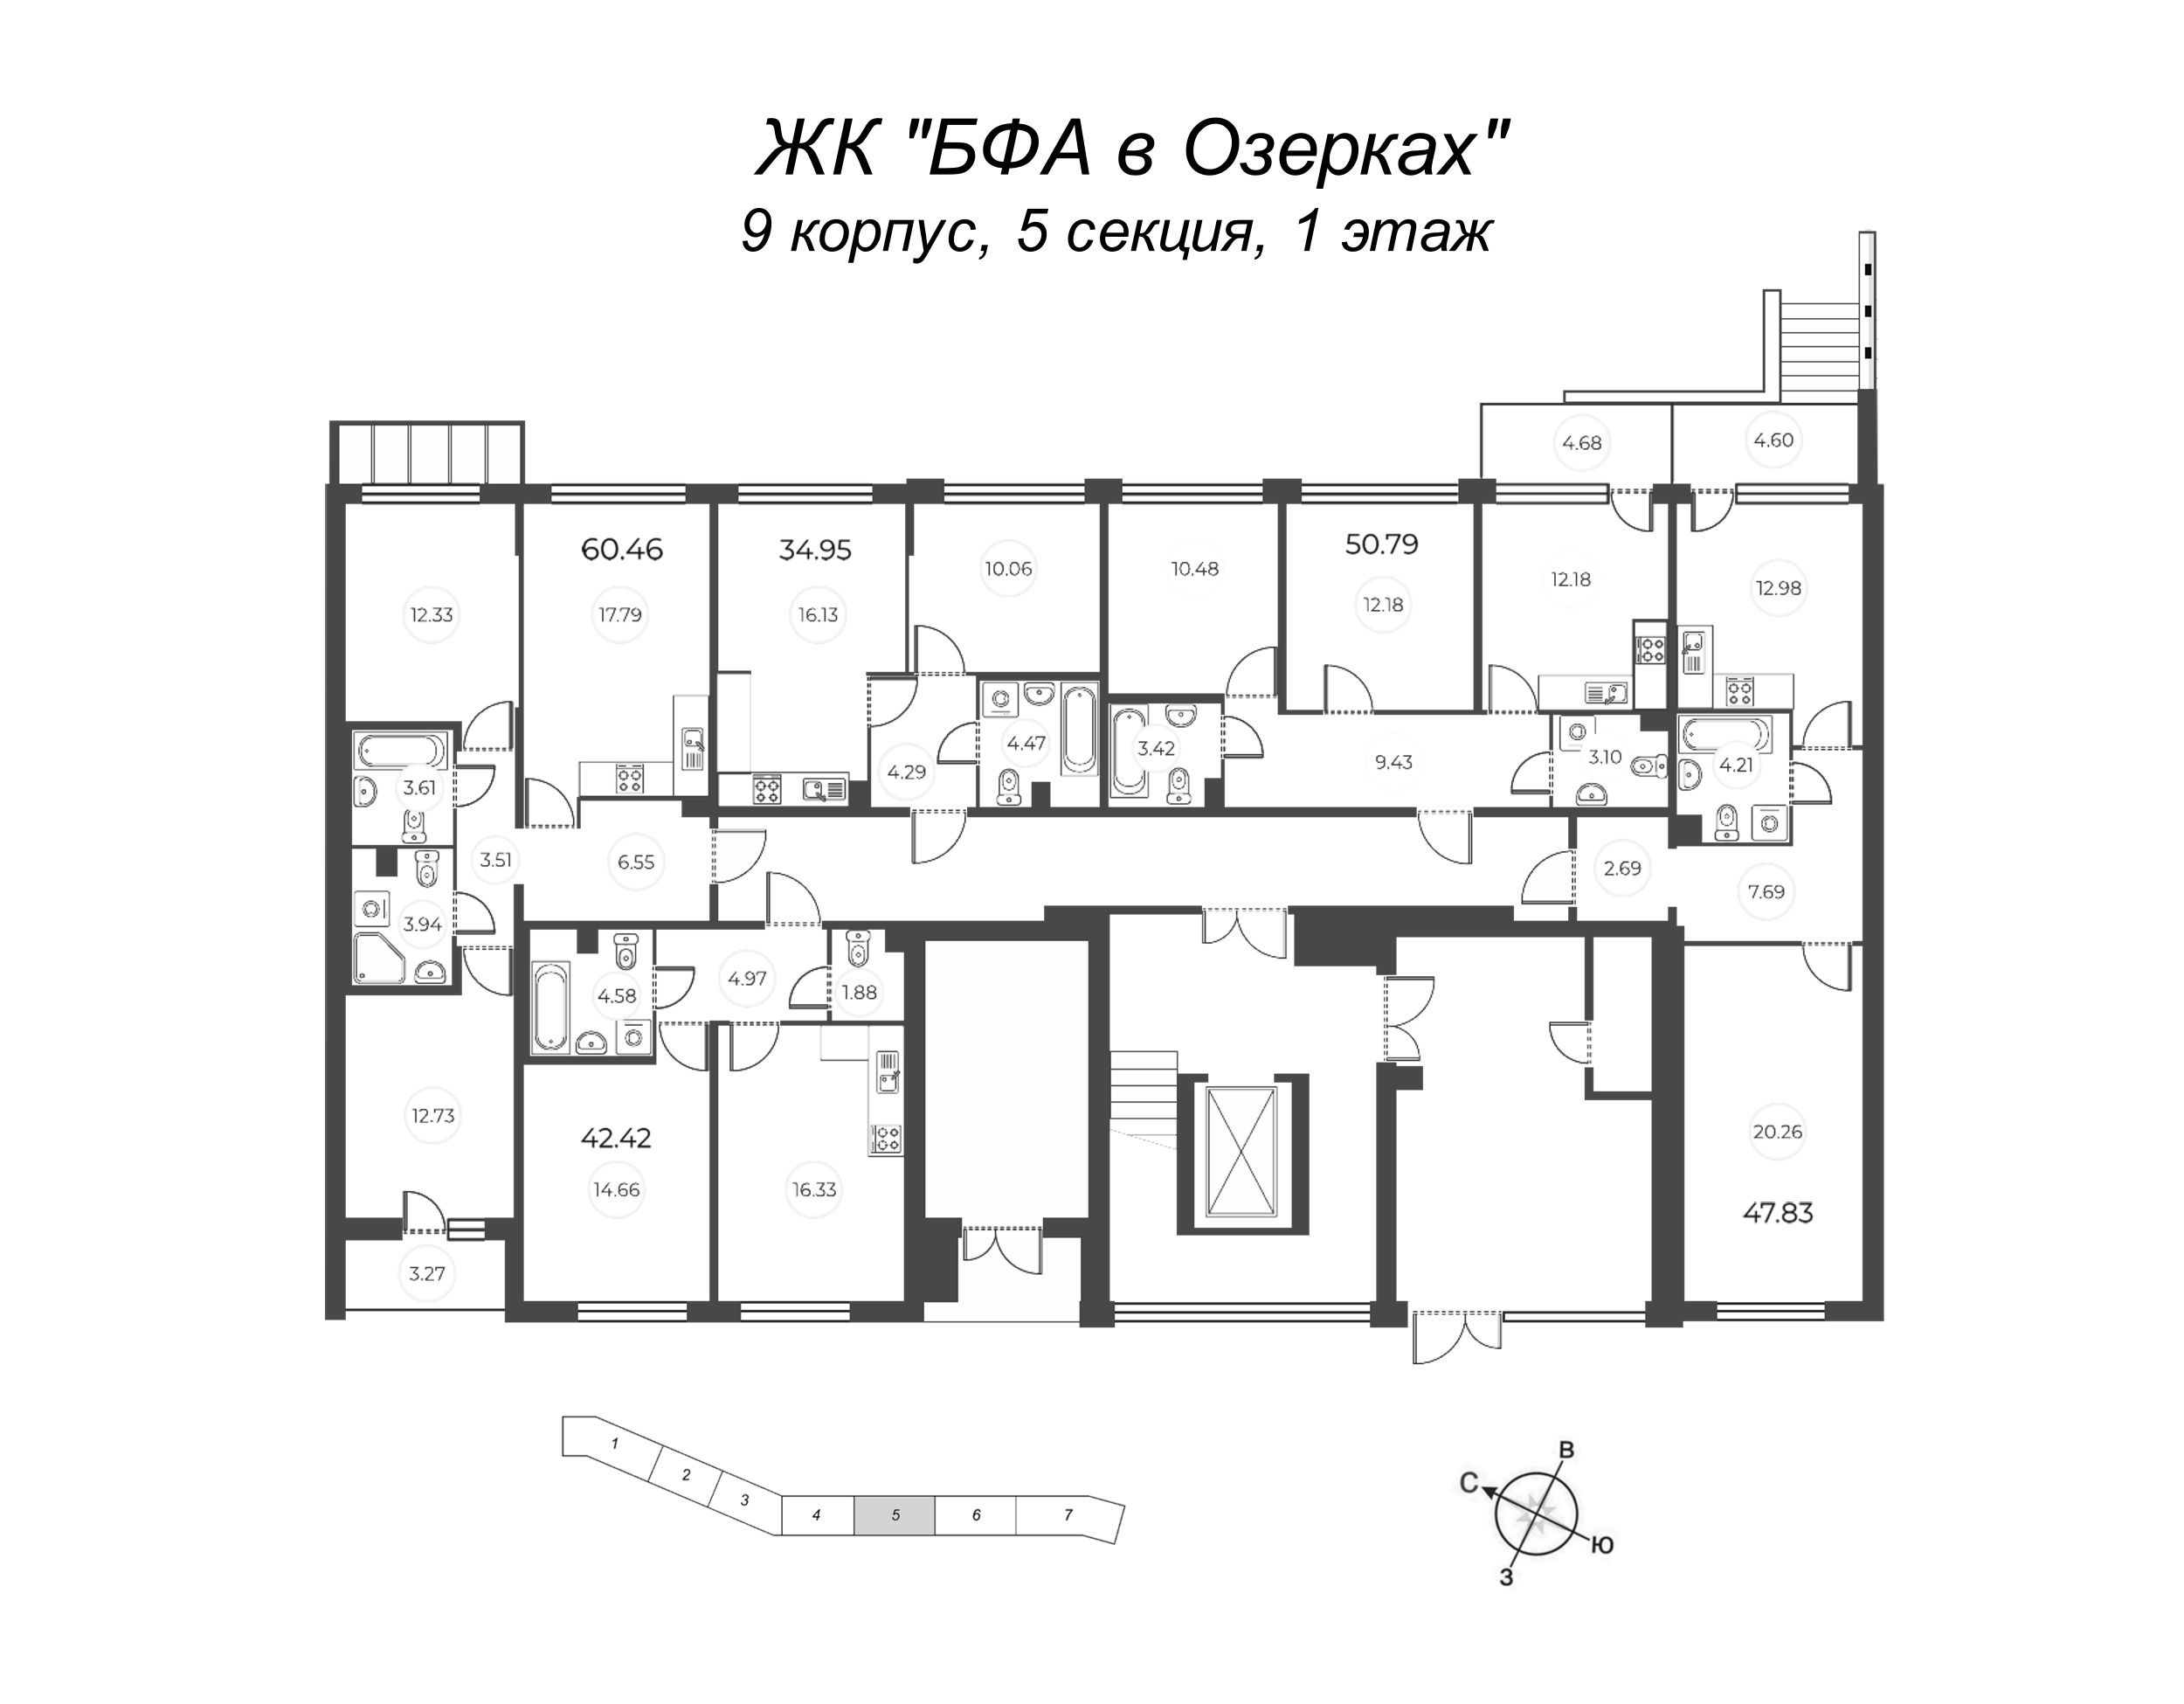 2-комнатная (Евро) квартира, 34.95 м² - планировка этажа